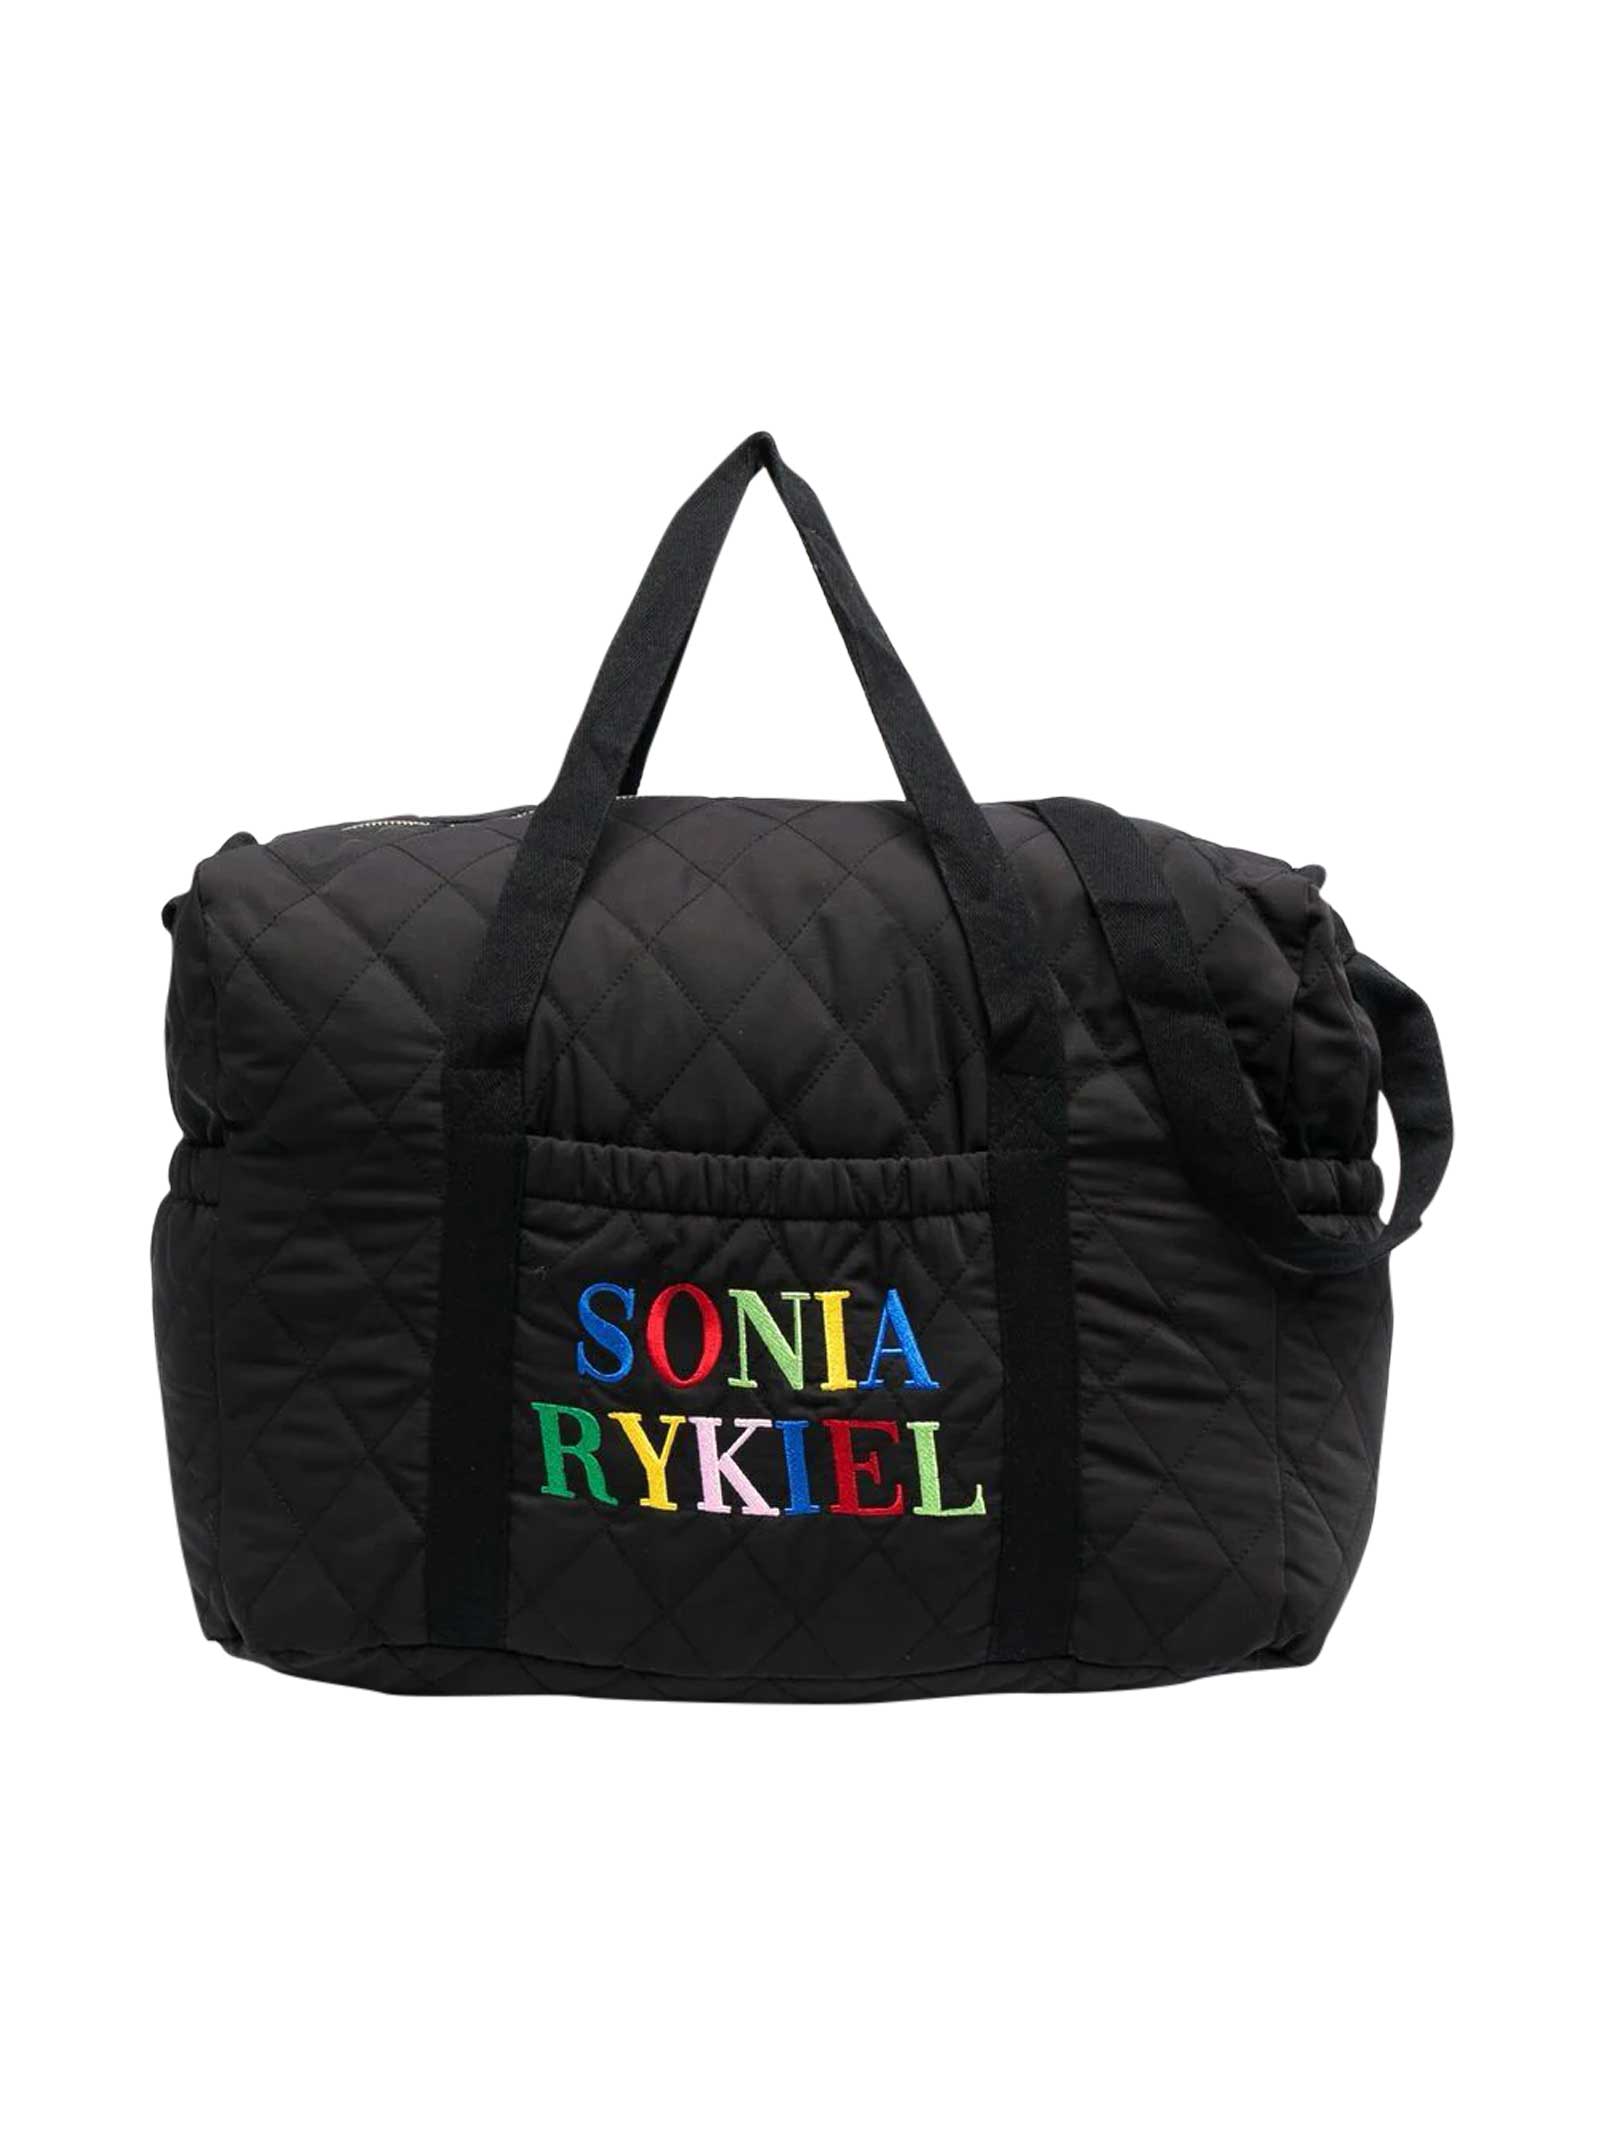 Sonia Rykiel Enfant Black Bag